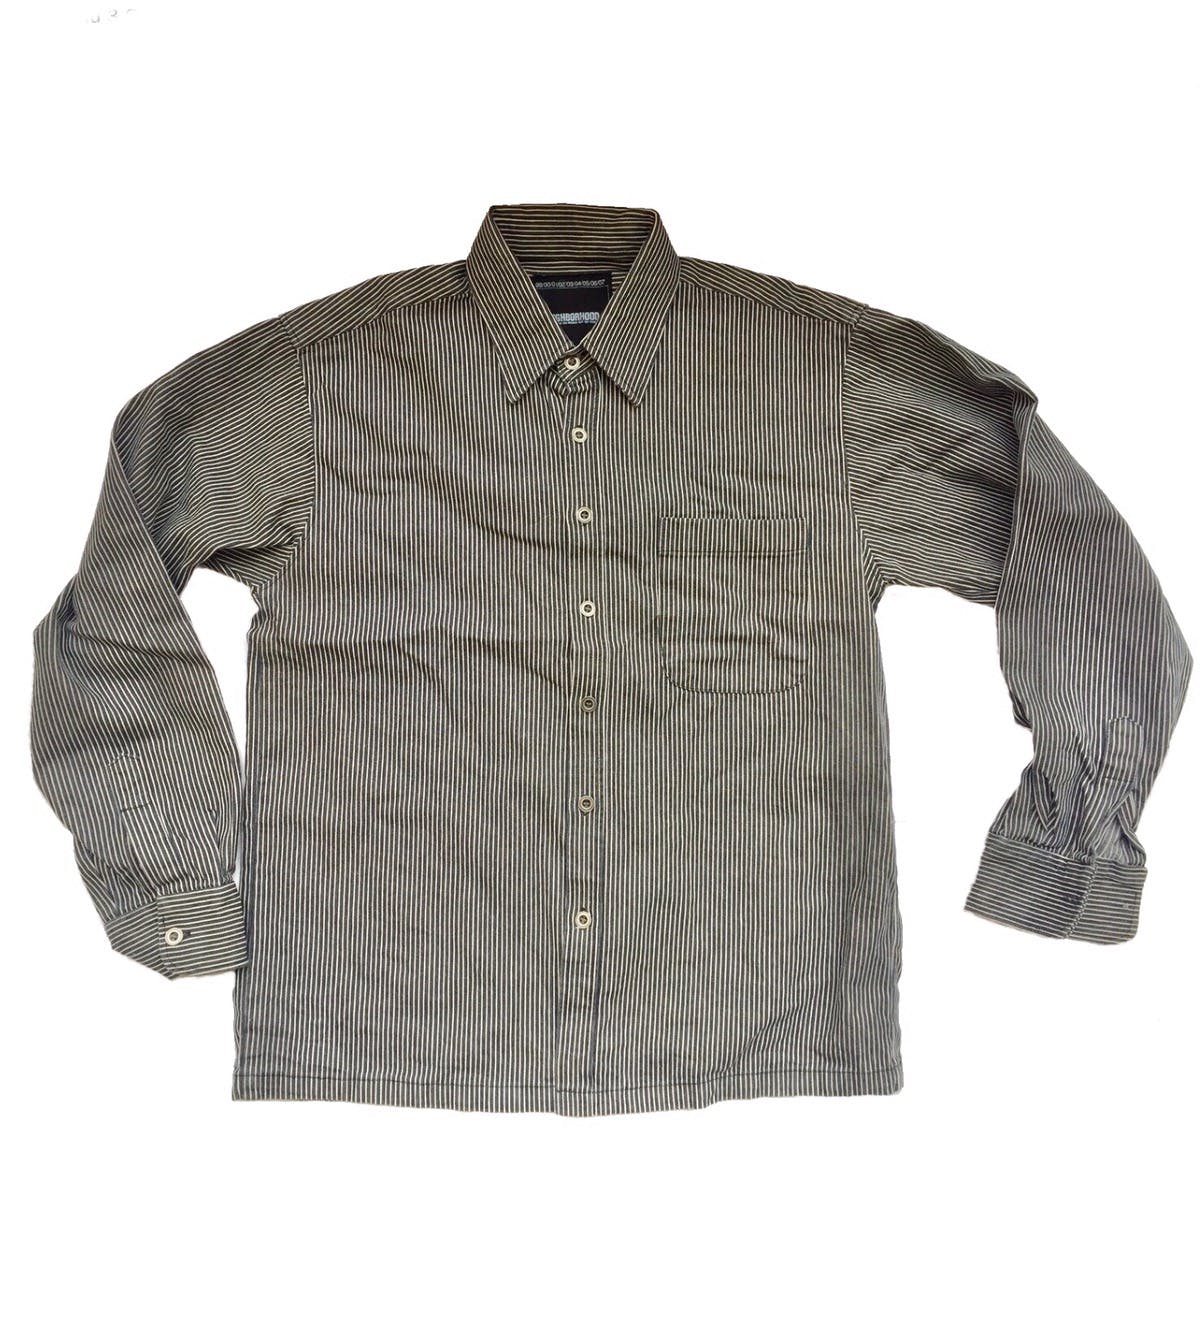 2002 Work Wear Shirt - 2